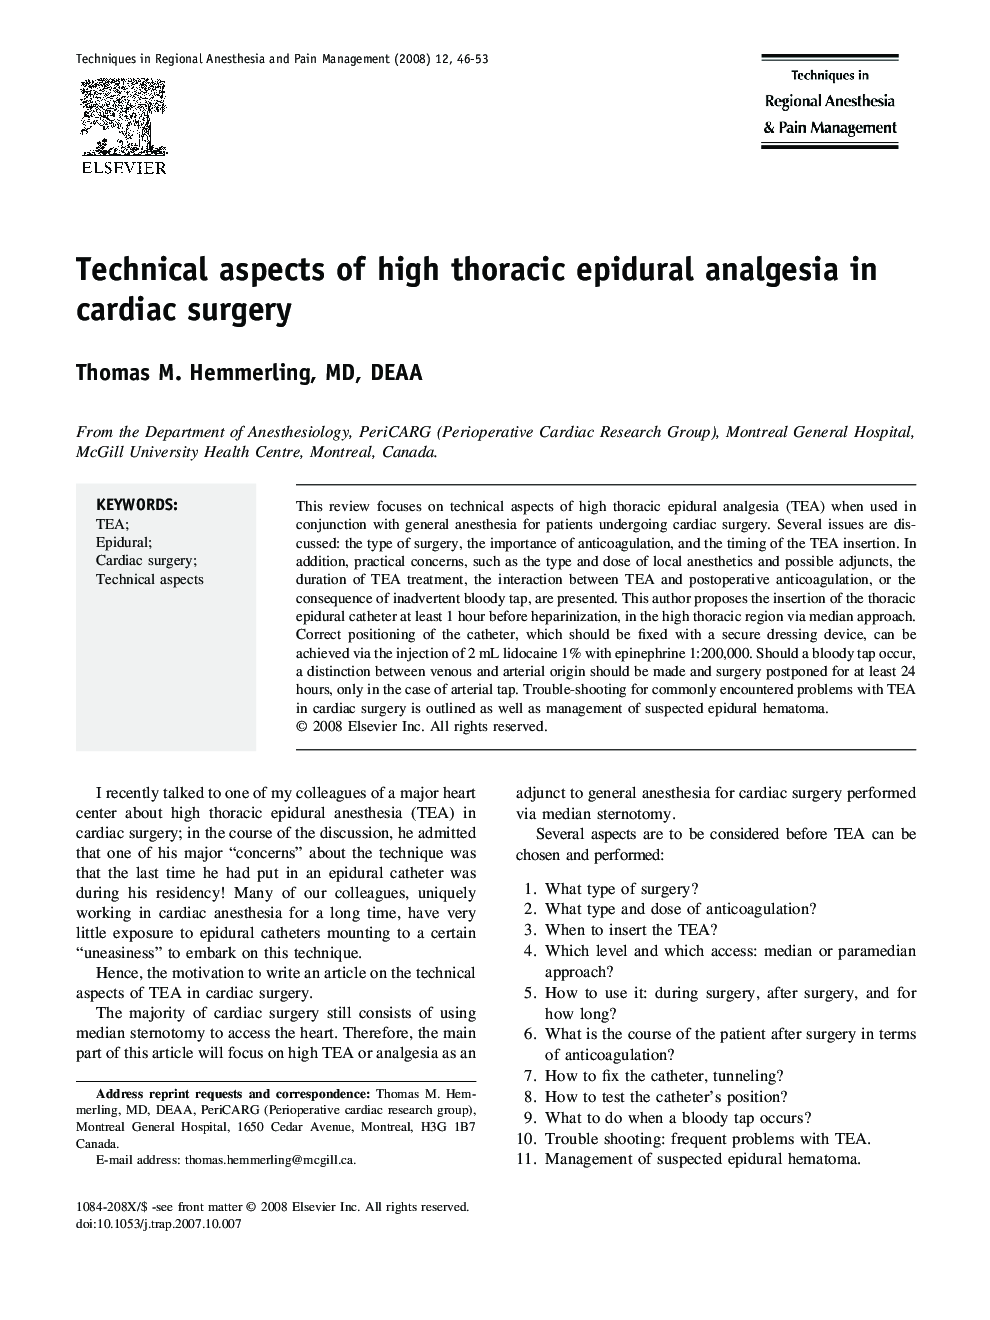 Technical aspects of high thoracic epidural analgesia in cardiac surgery